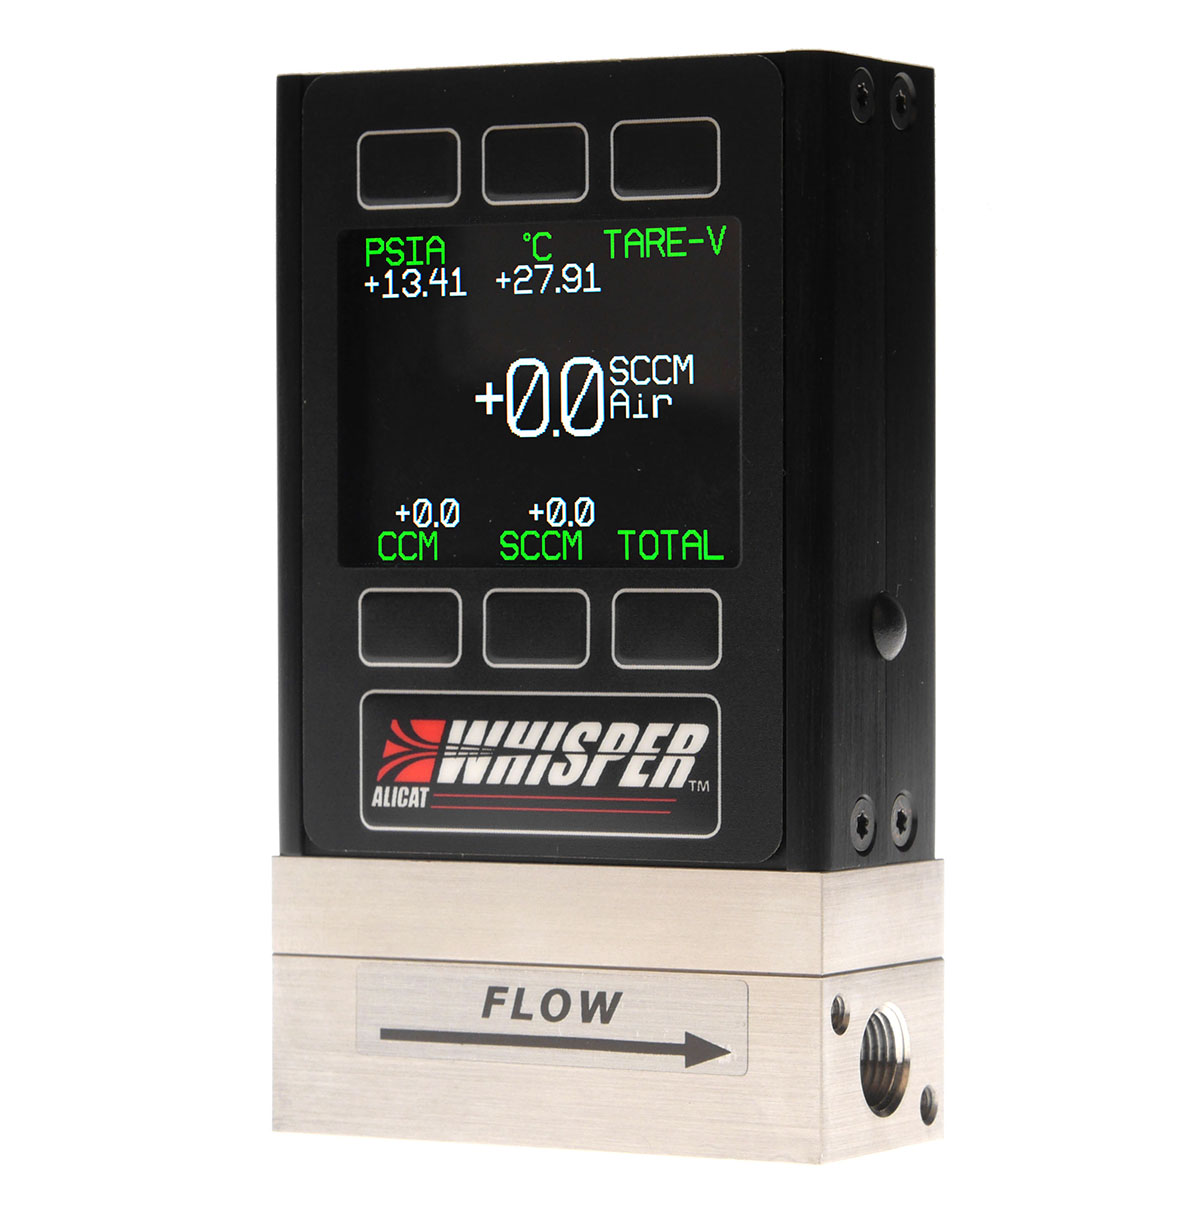 Mass flow meter: Alicat MW Whisper series mass flow meter